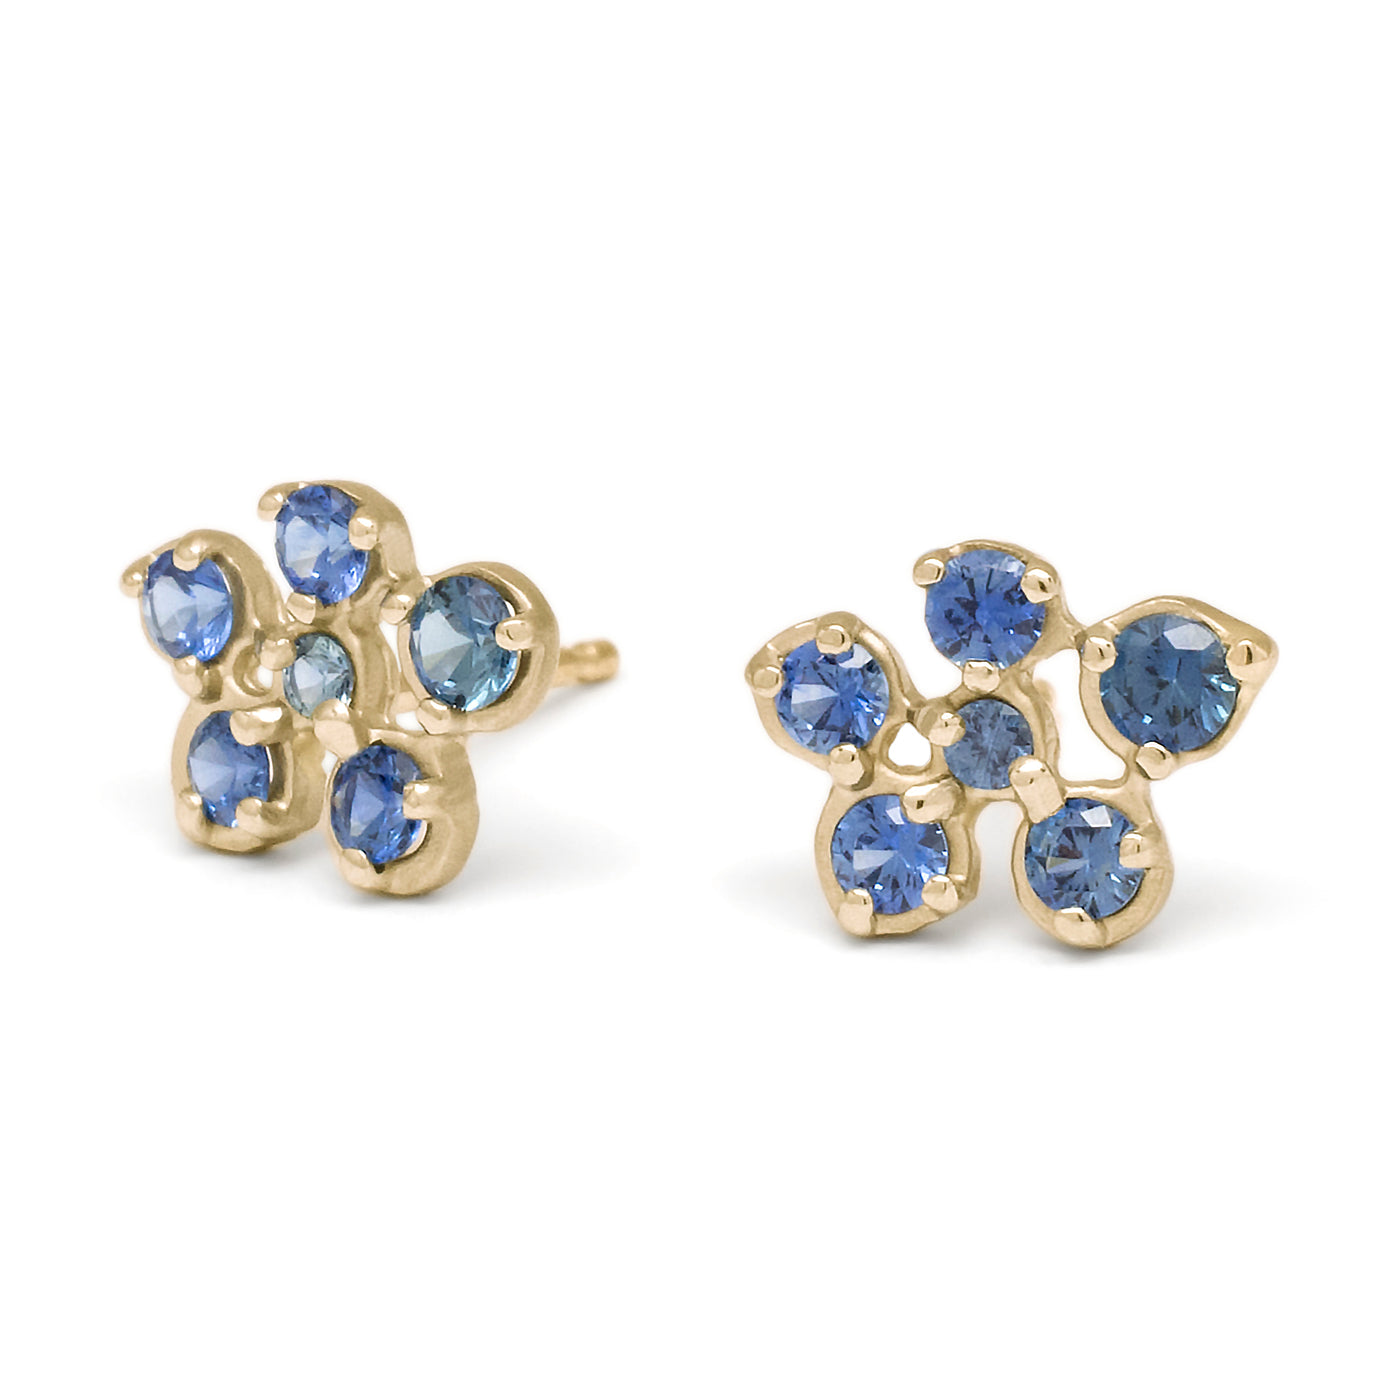 18k yellow gold stud earrings blue sapphires flower